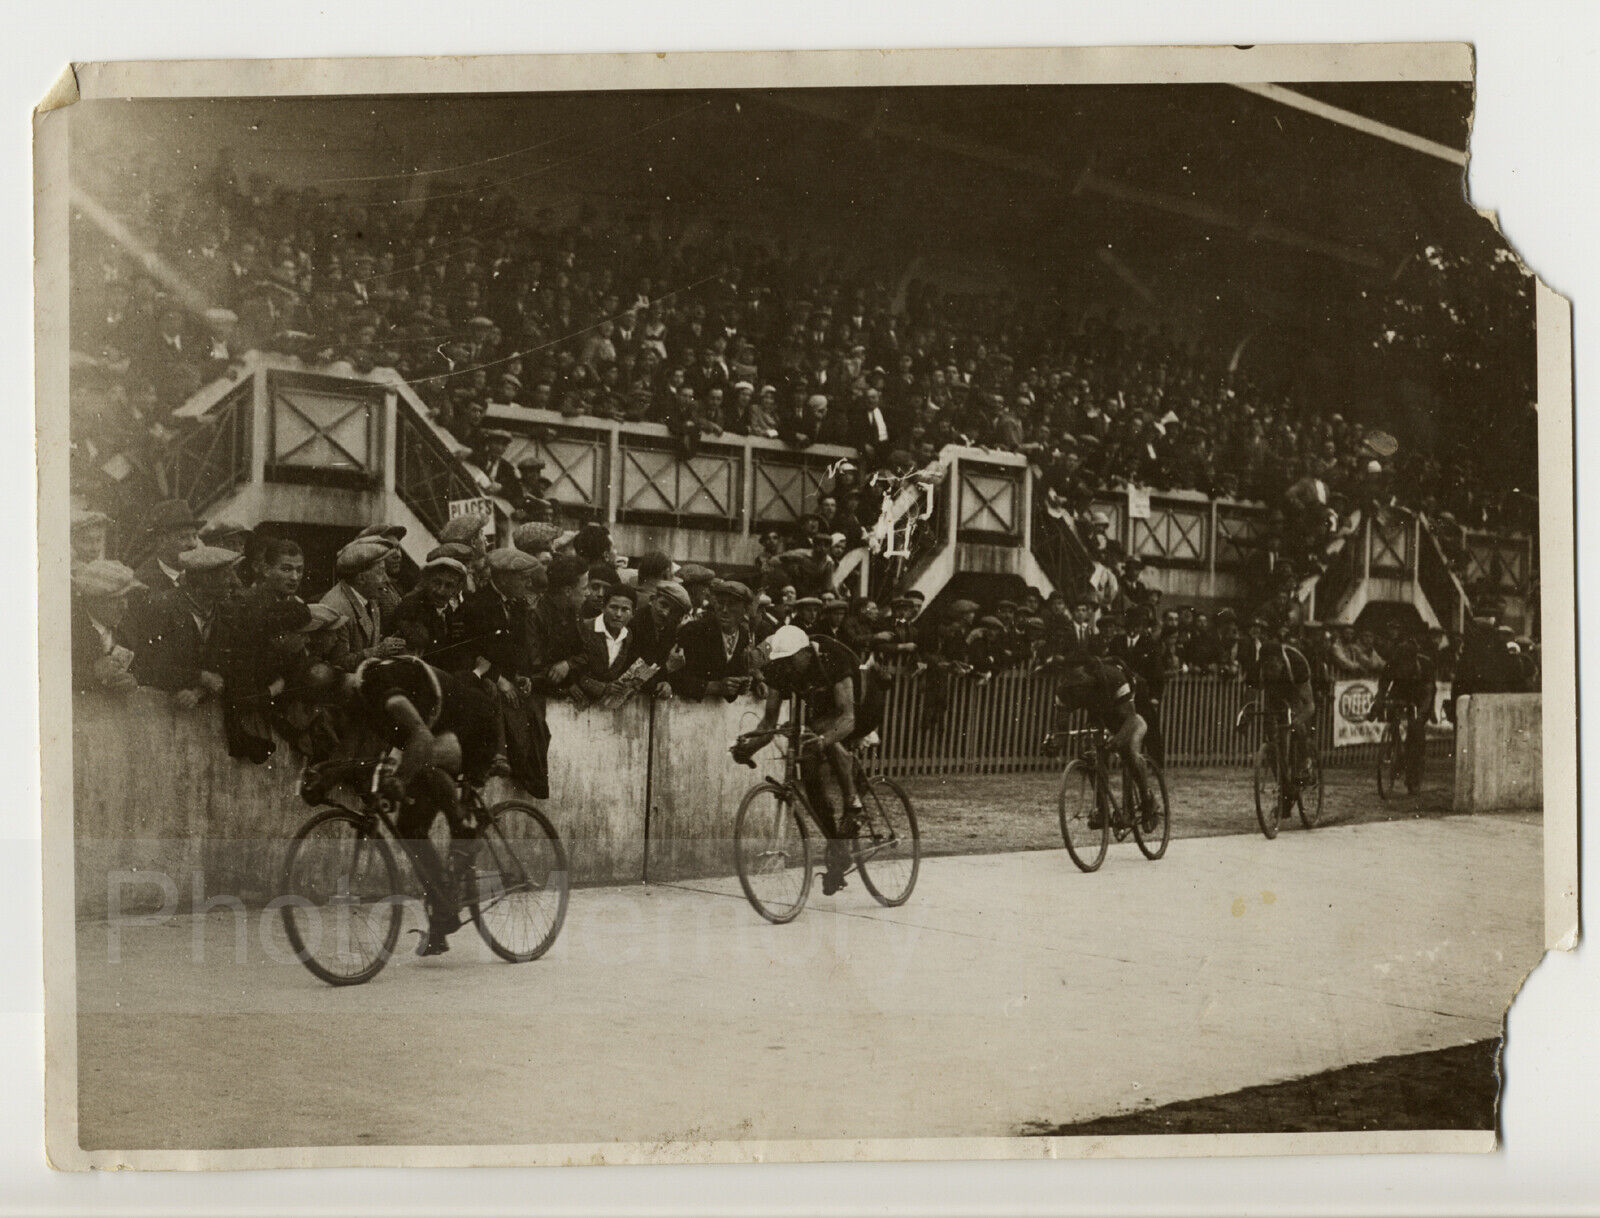 1933 Tour de France: arrival at the Charleville velodrome - vintage photo